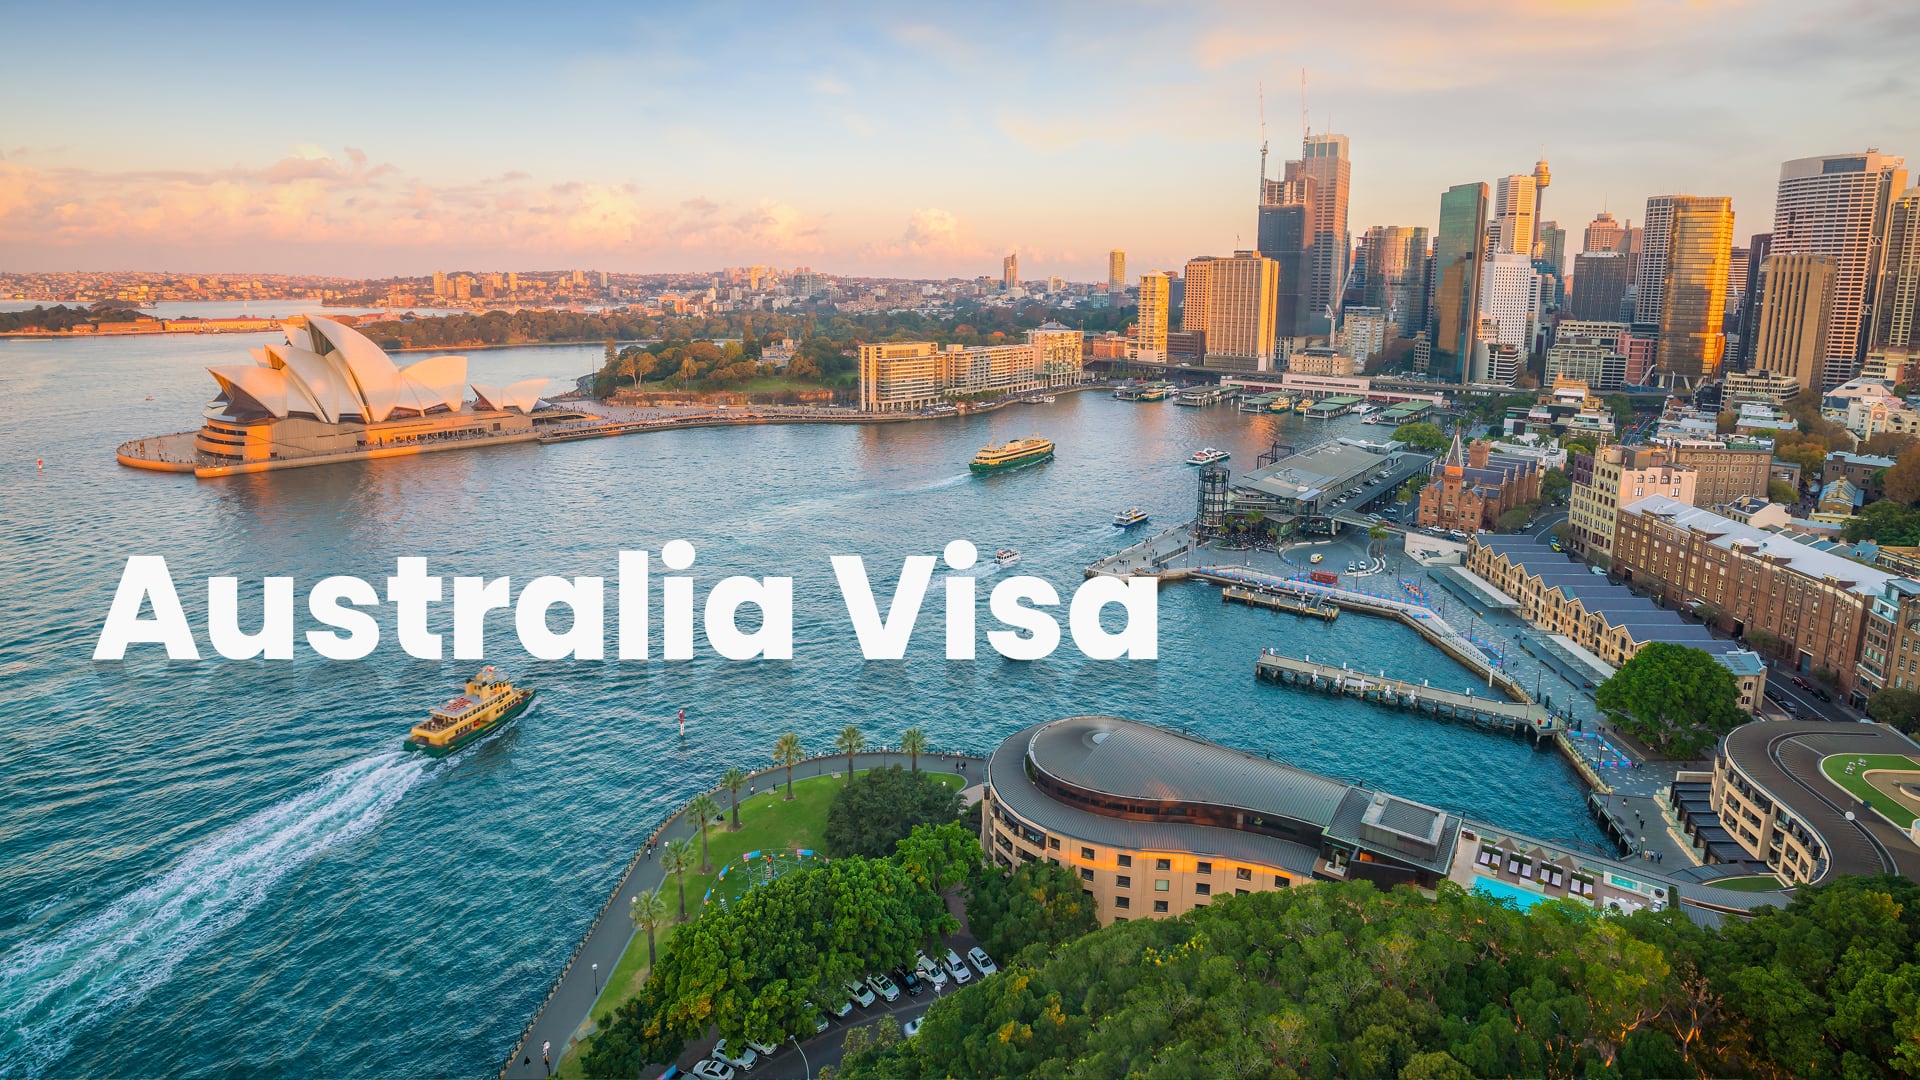 Australian visa from Dubai UAE